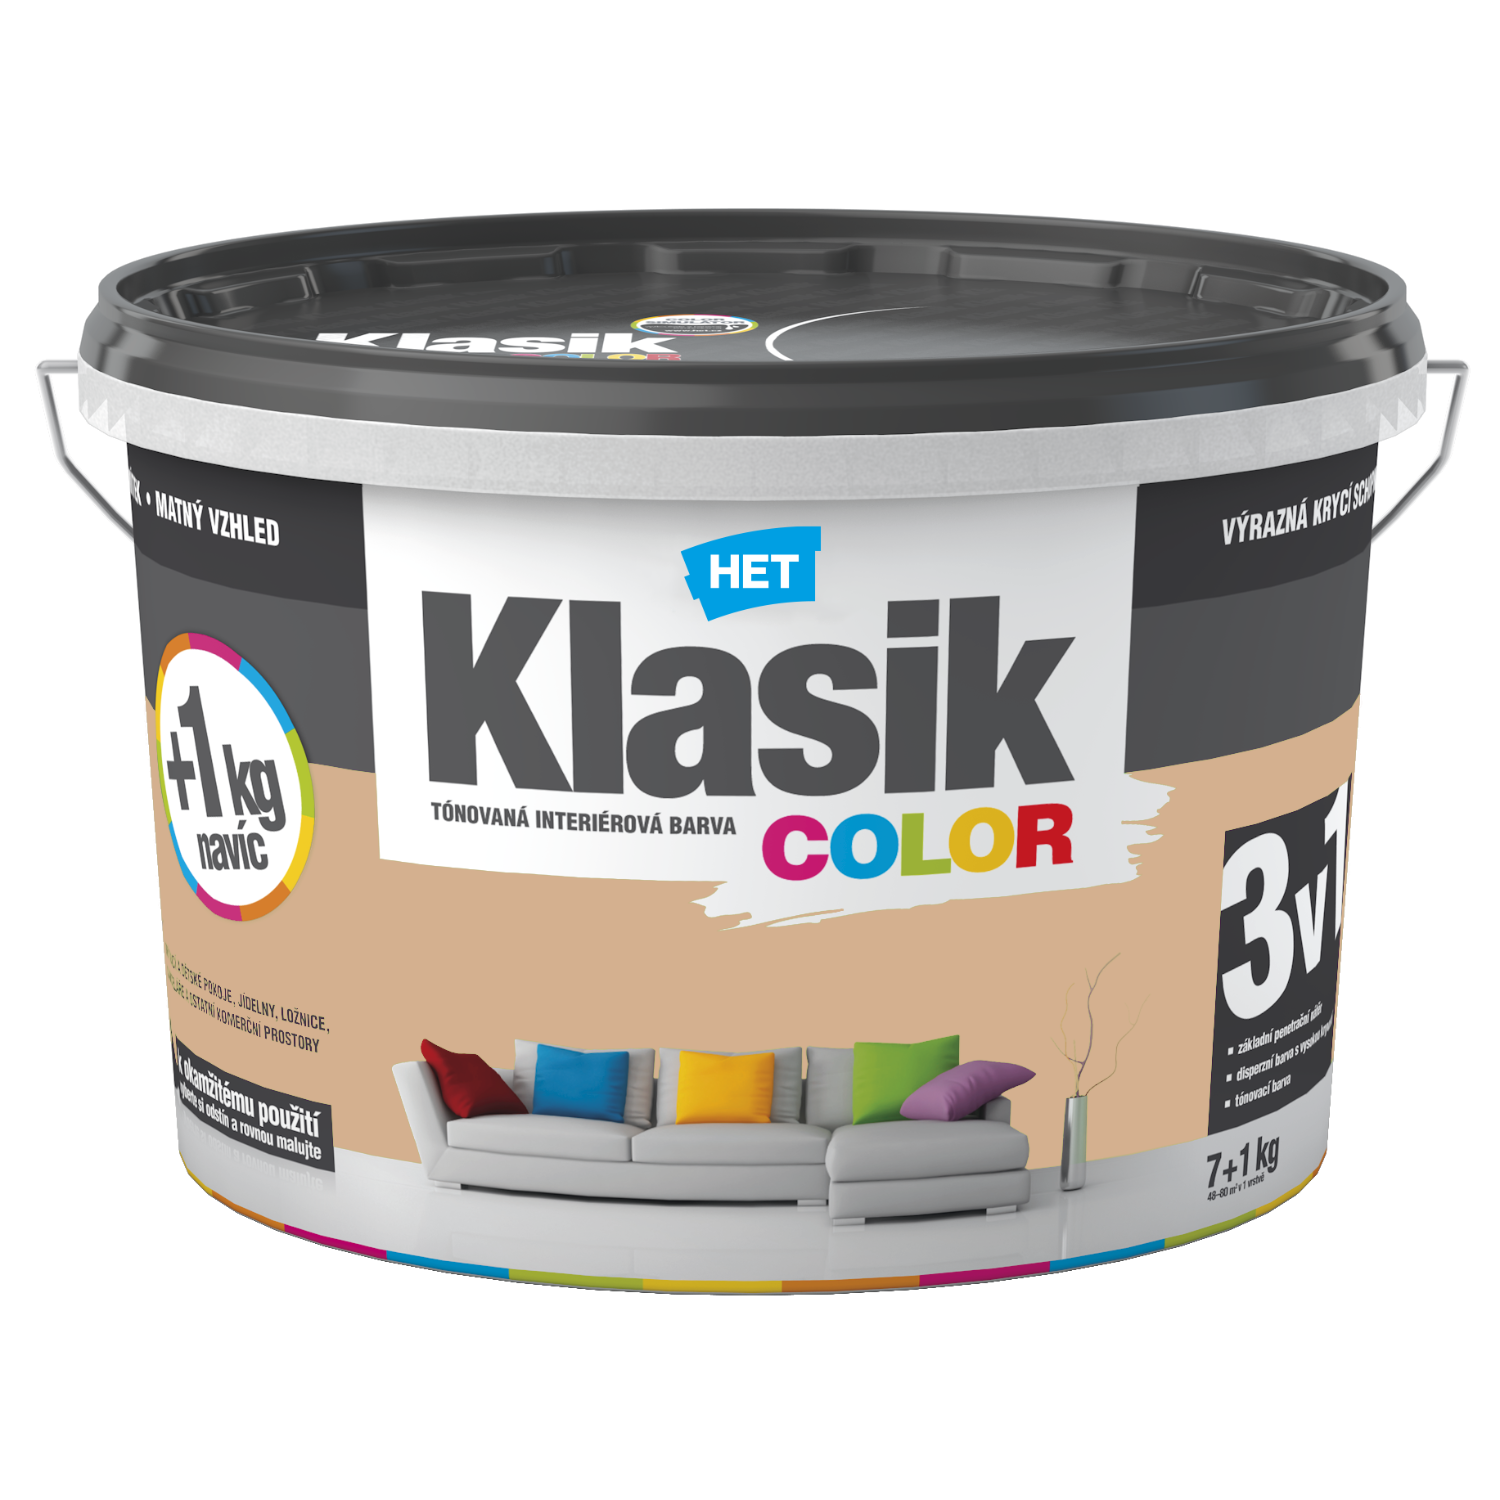 HET Klasik COLOR tónovaná interiérová akrylátová disperzná oteruvzdorná farba 7 kg + 1 kg zdarma, KC0257 - hnedý orechový